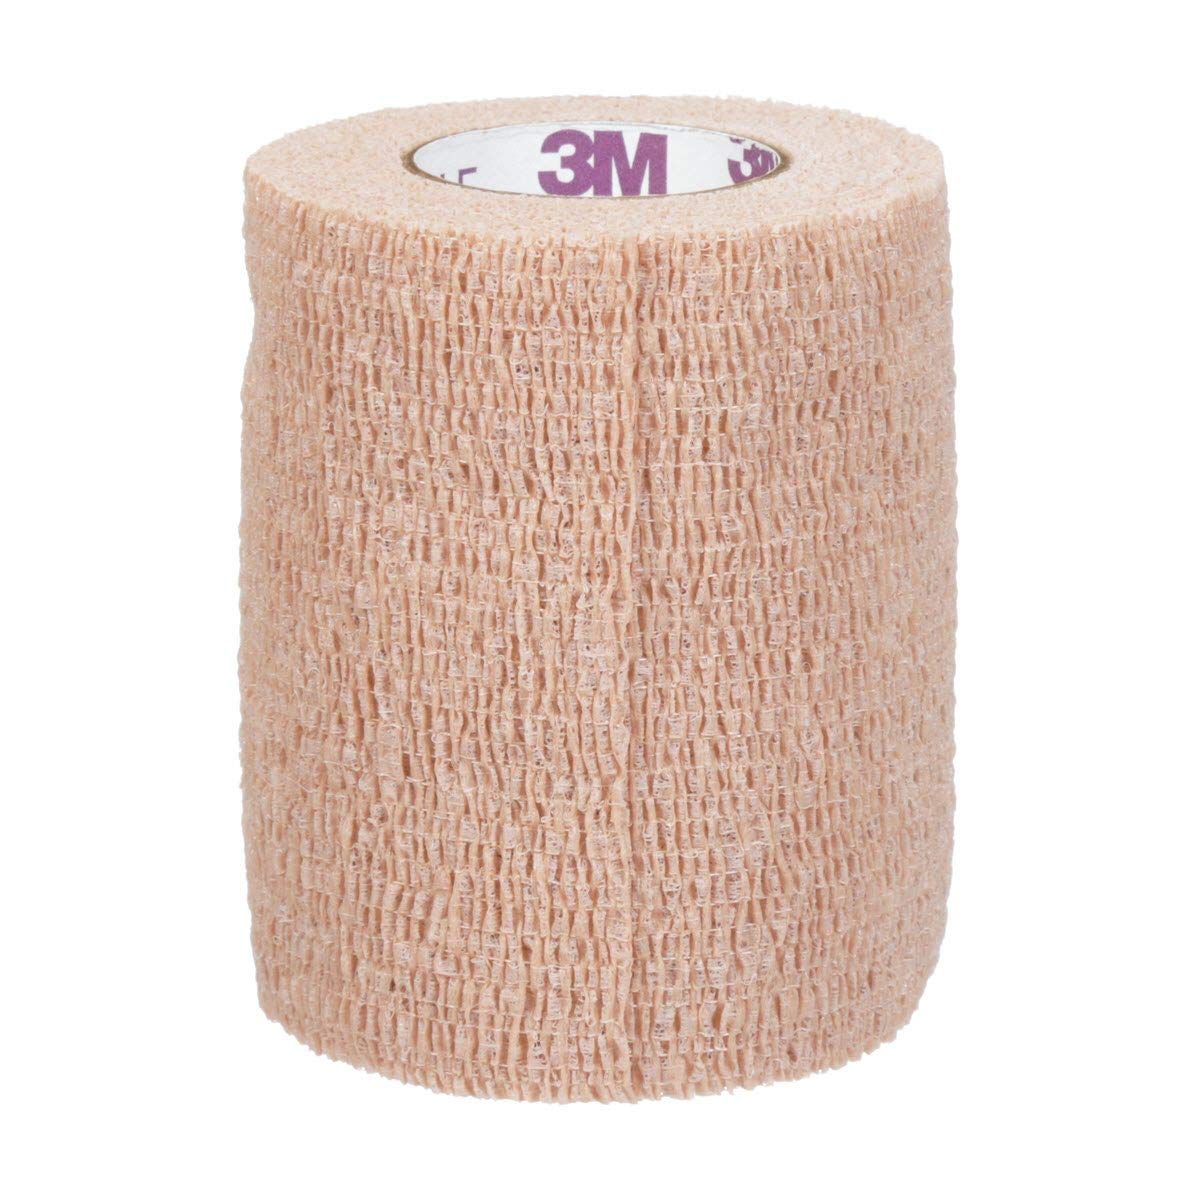 3M 3M Adhesive Bandage Tape - 3